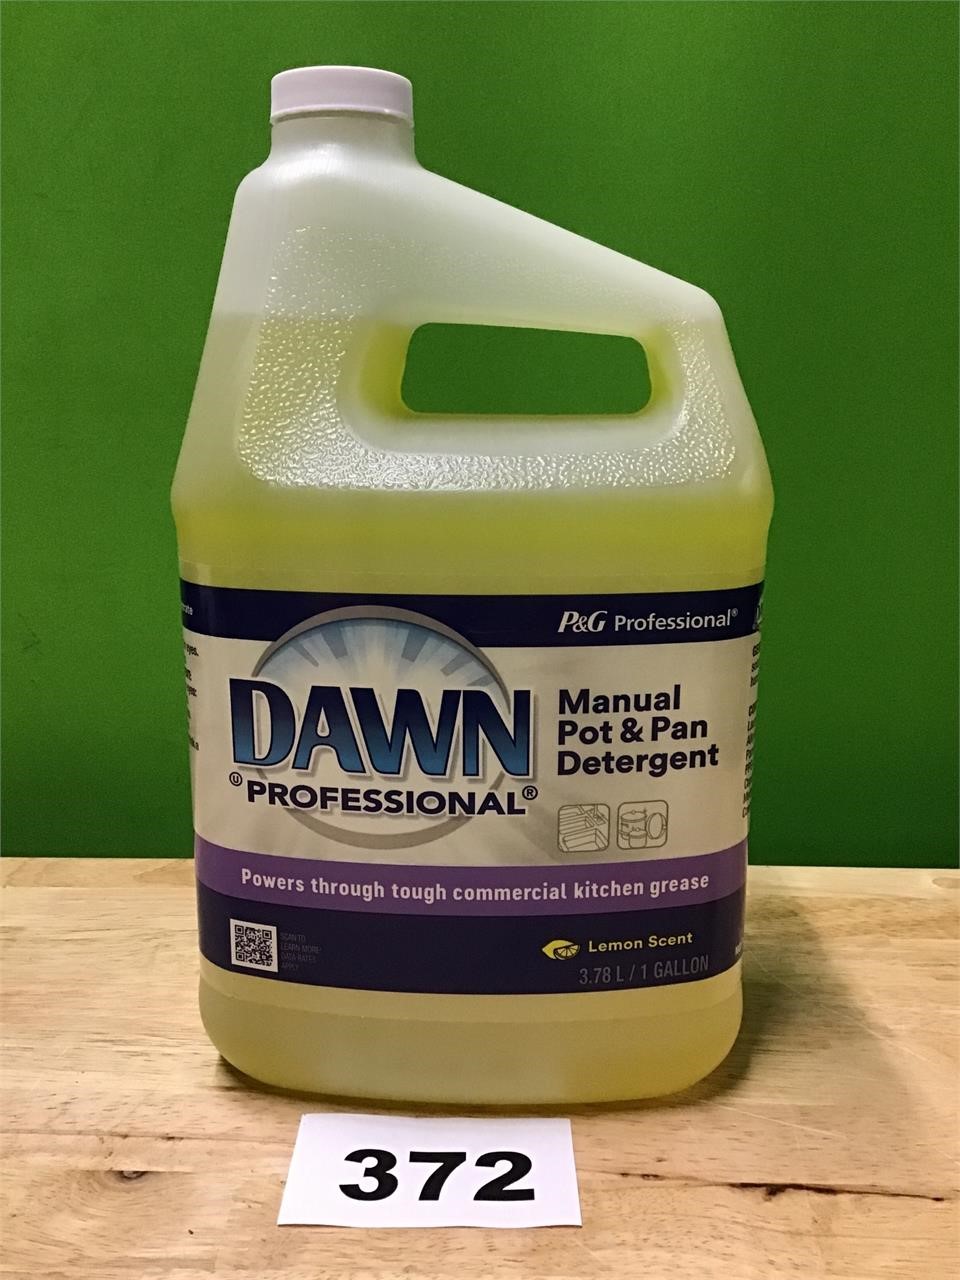 Dawn Professional Manual Pot & Pan Detergent